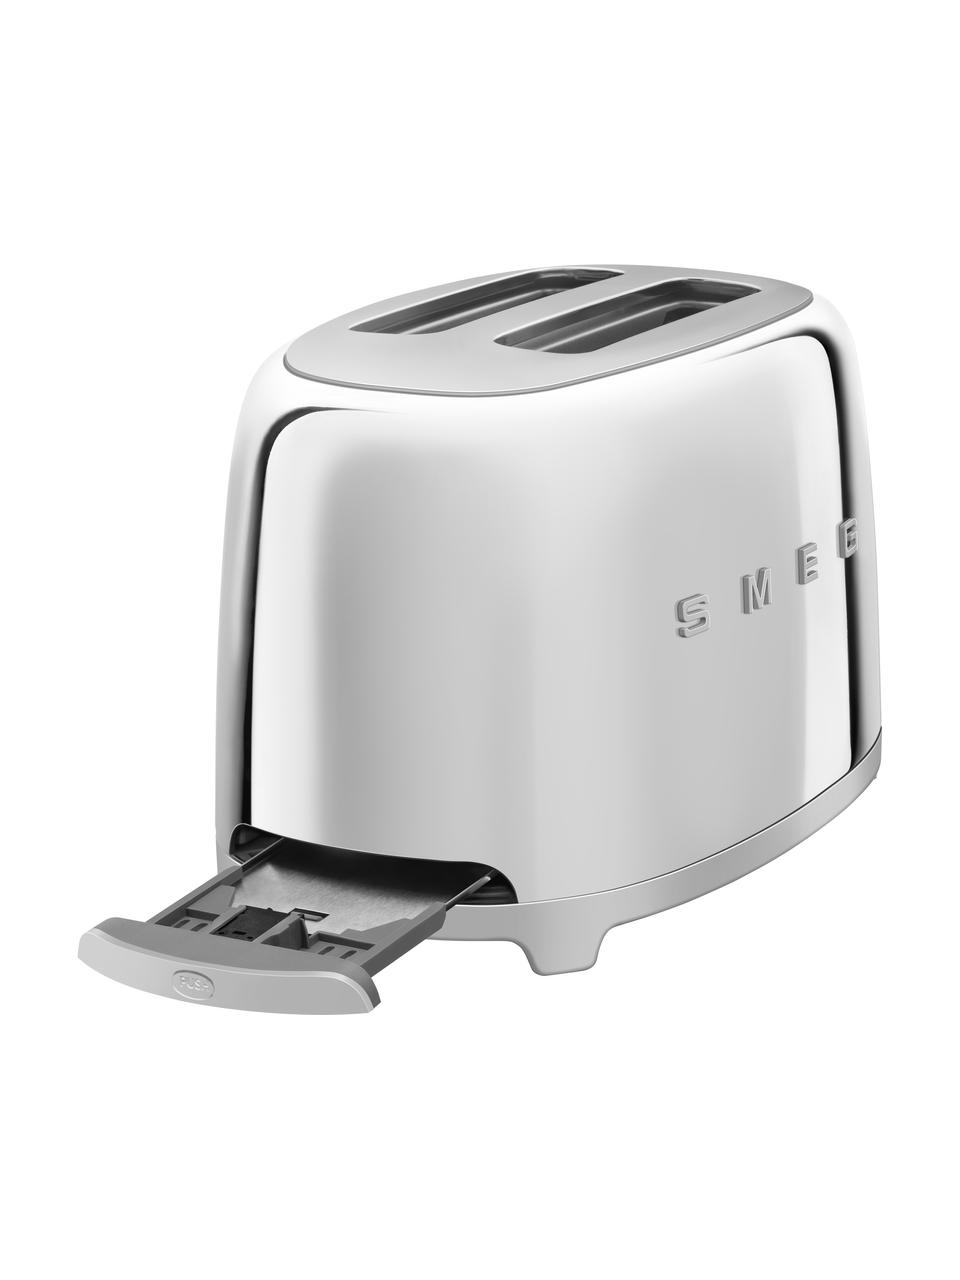 Kompakt Toaster 50's Style, Edelstahl, lackiert, Chromfarben, glänzend, B 31 x T 20 cm